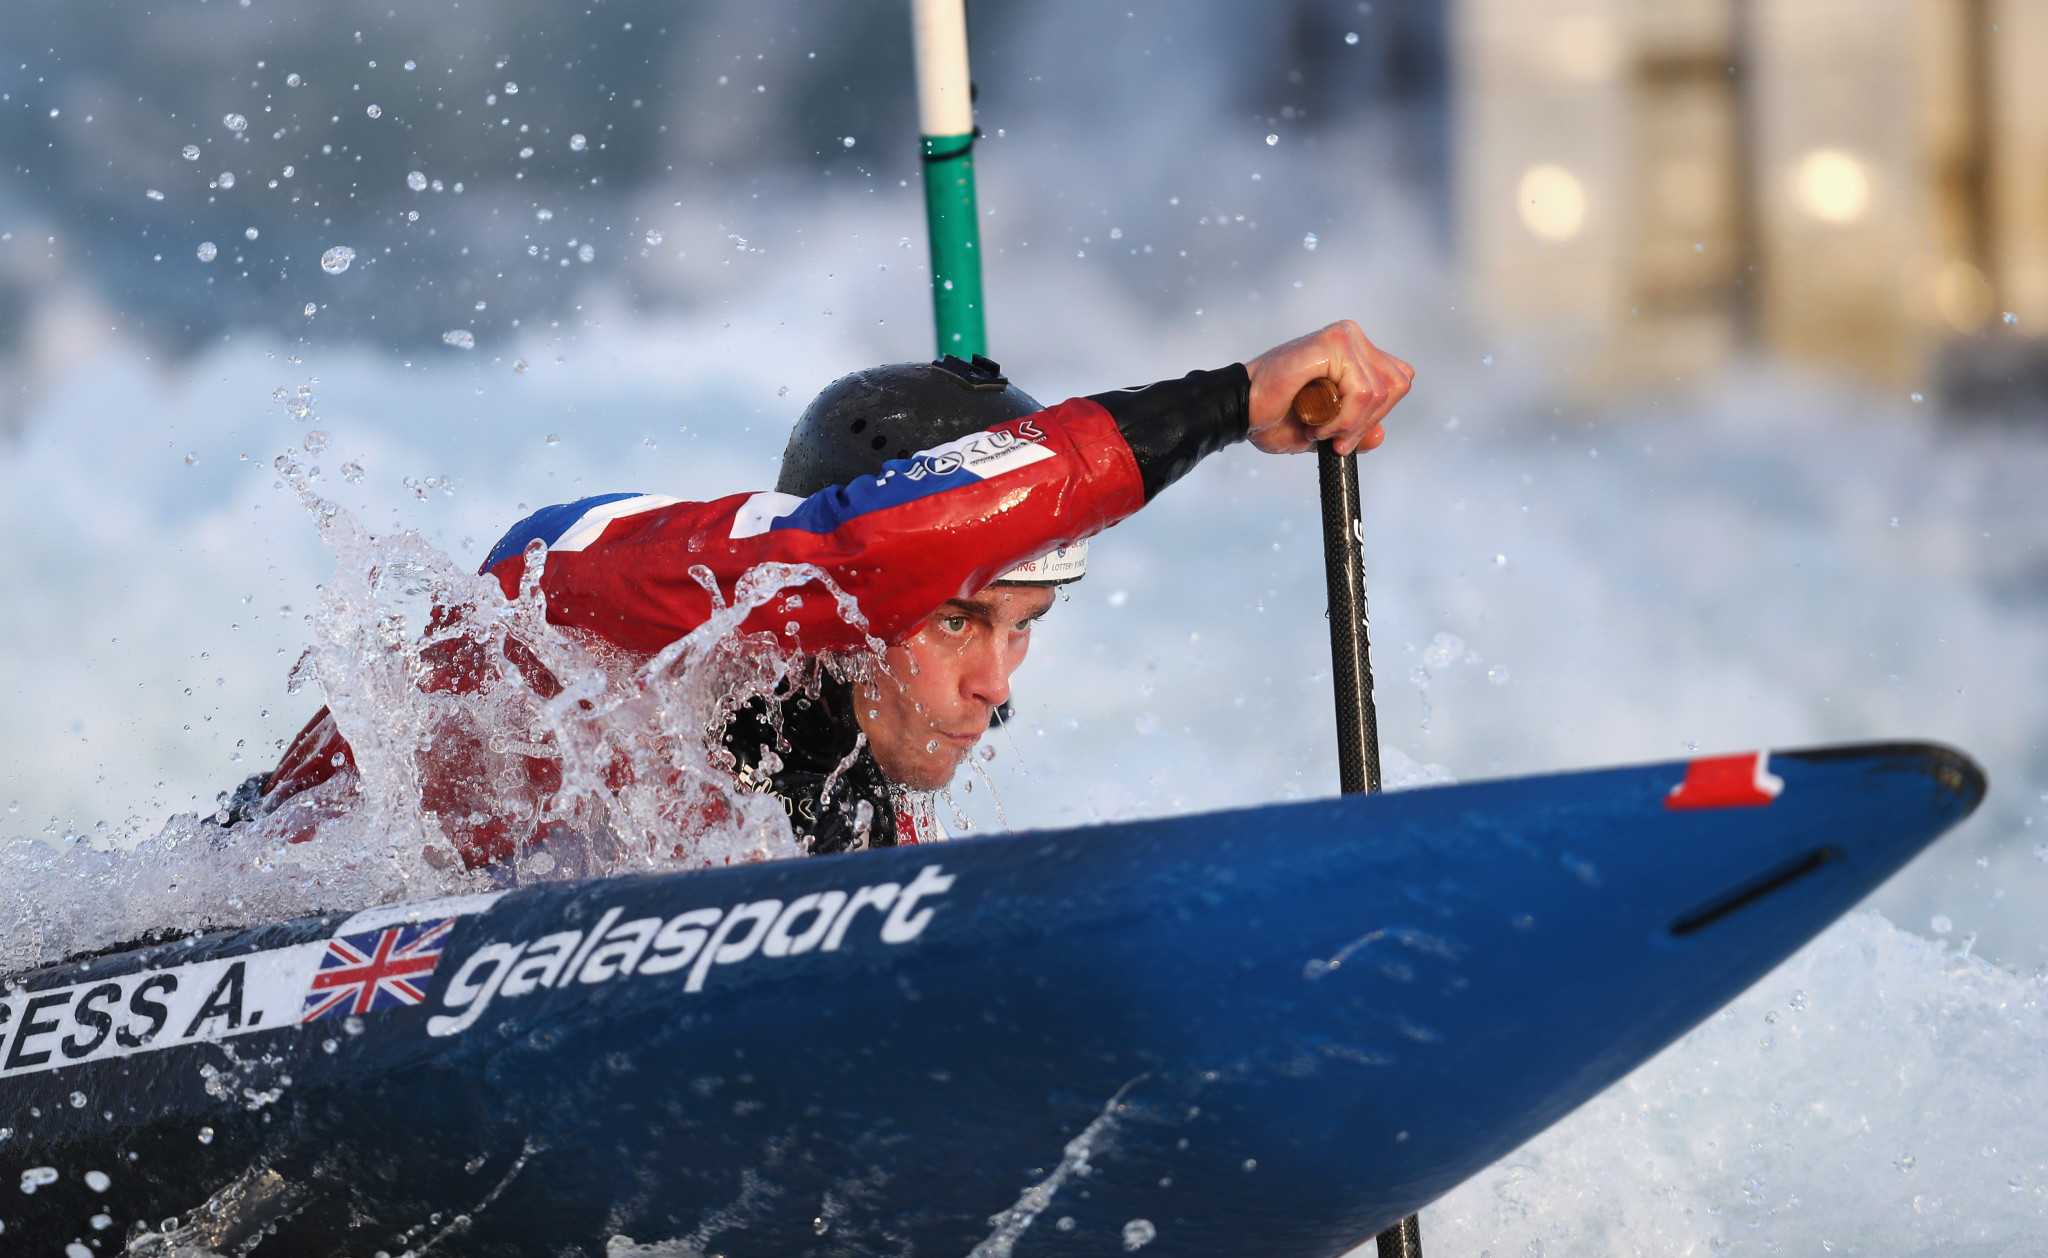 Ivrea gets 2021 Canoe Slalom European Championships as ECA announces five awards